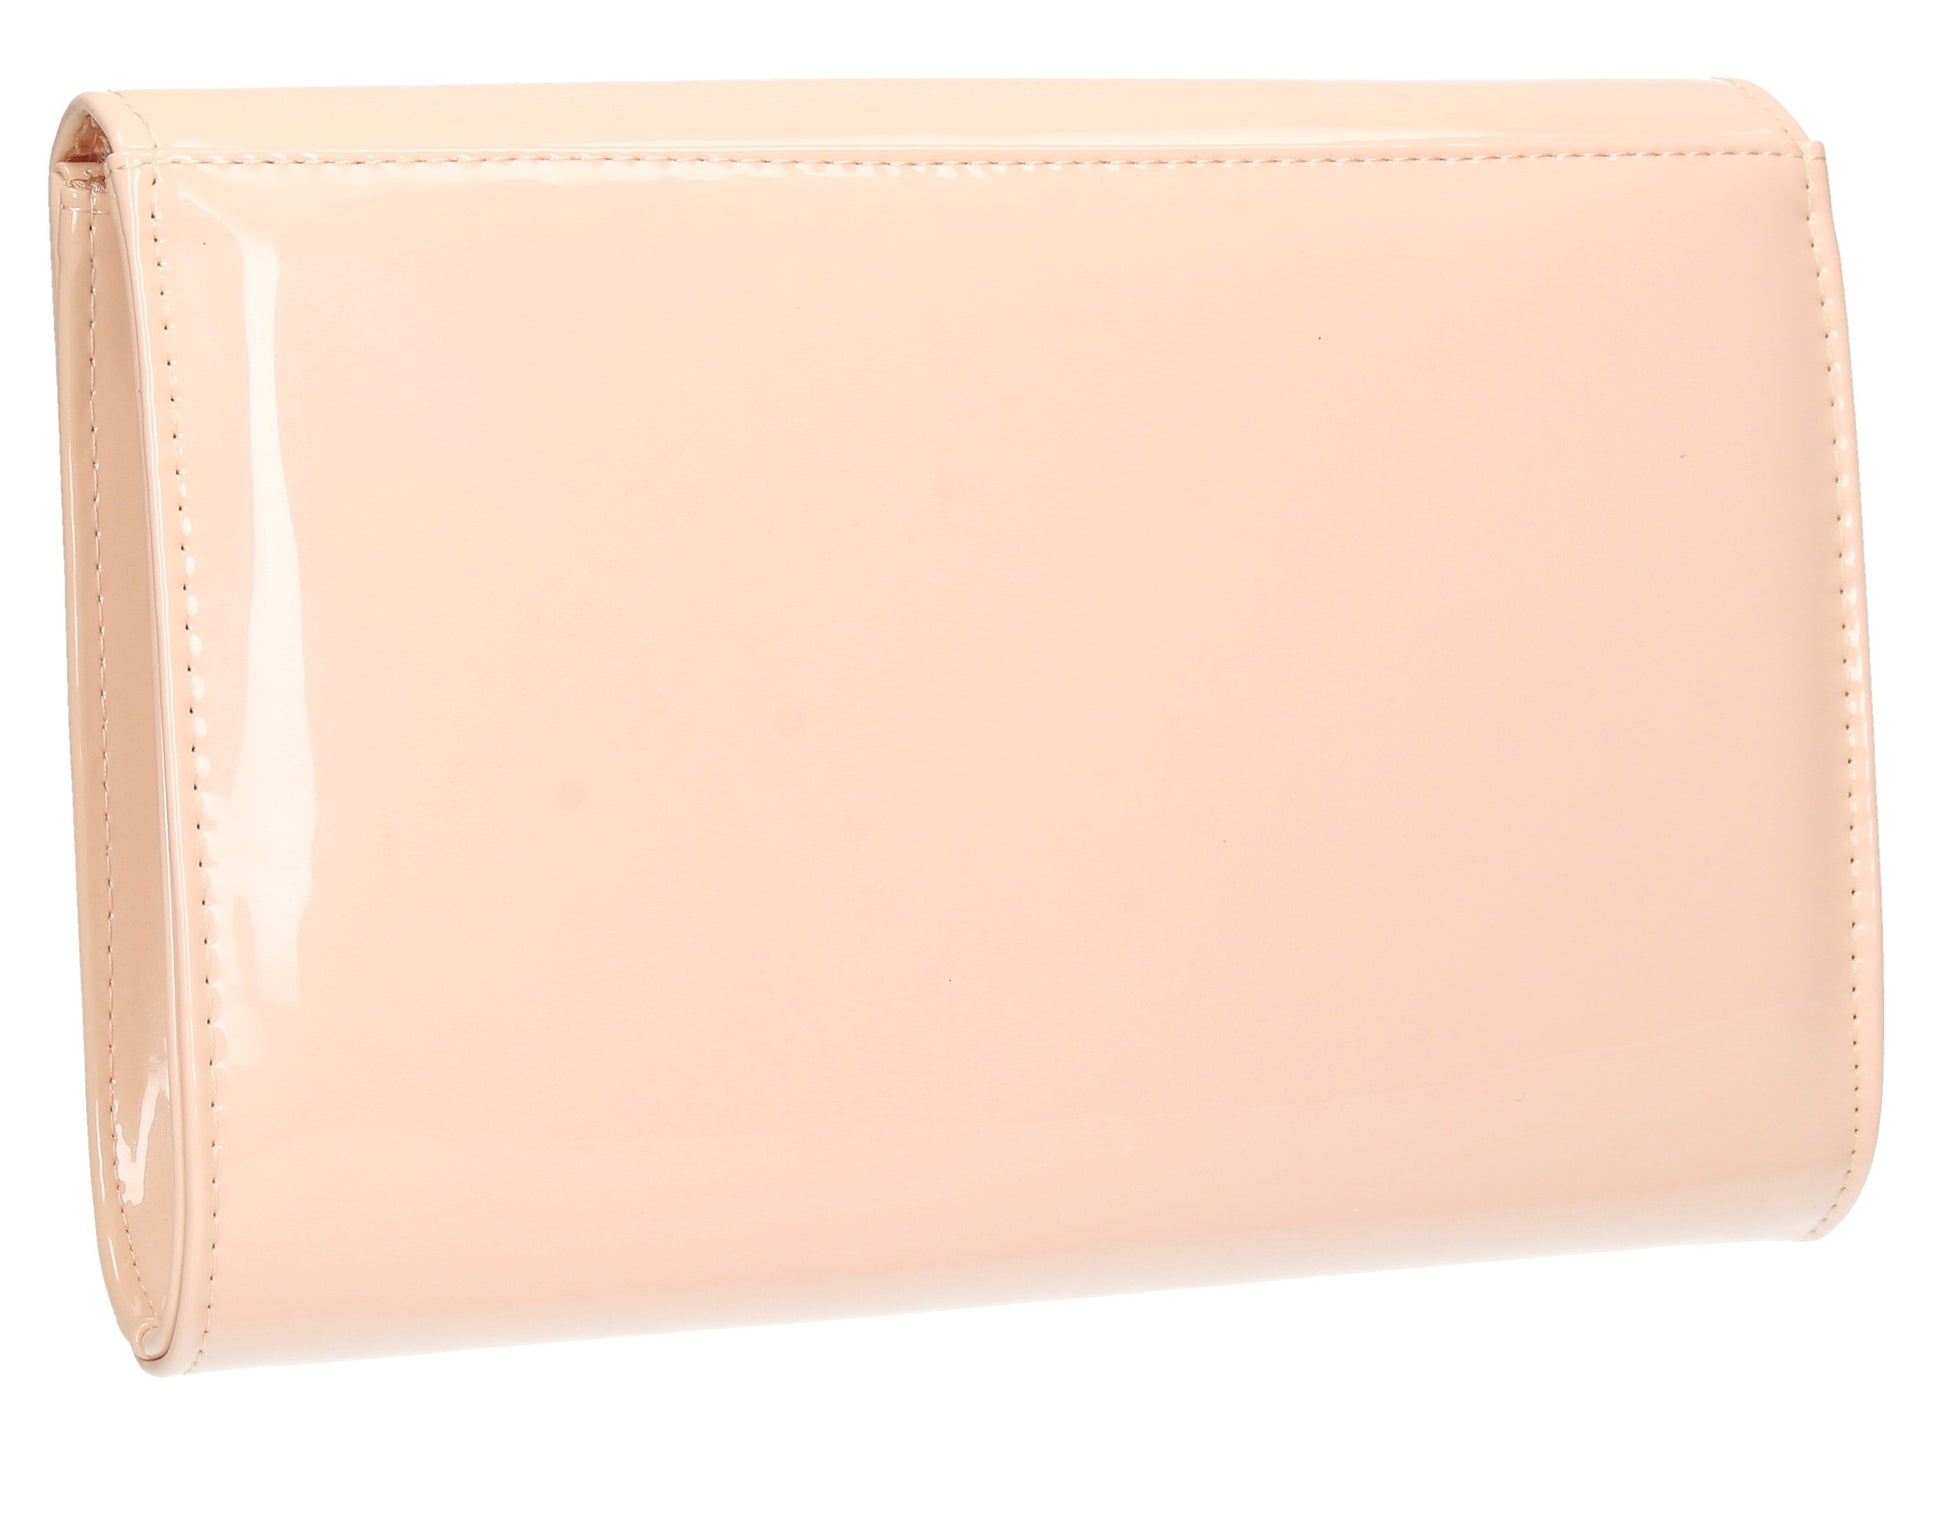 SWANKYSWANS Merci Clutch Bag Pink Beige Cute Cheap Clutch Bag For Weddings School and Work